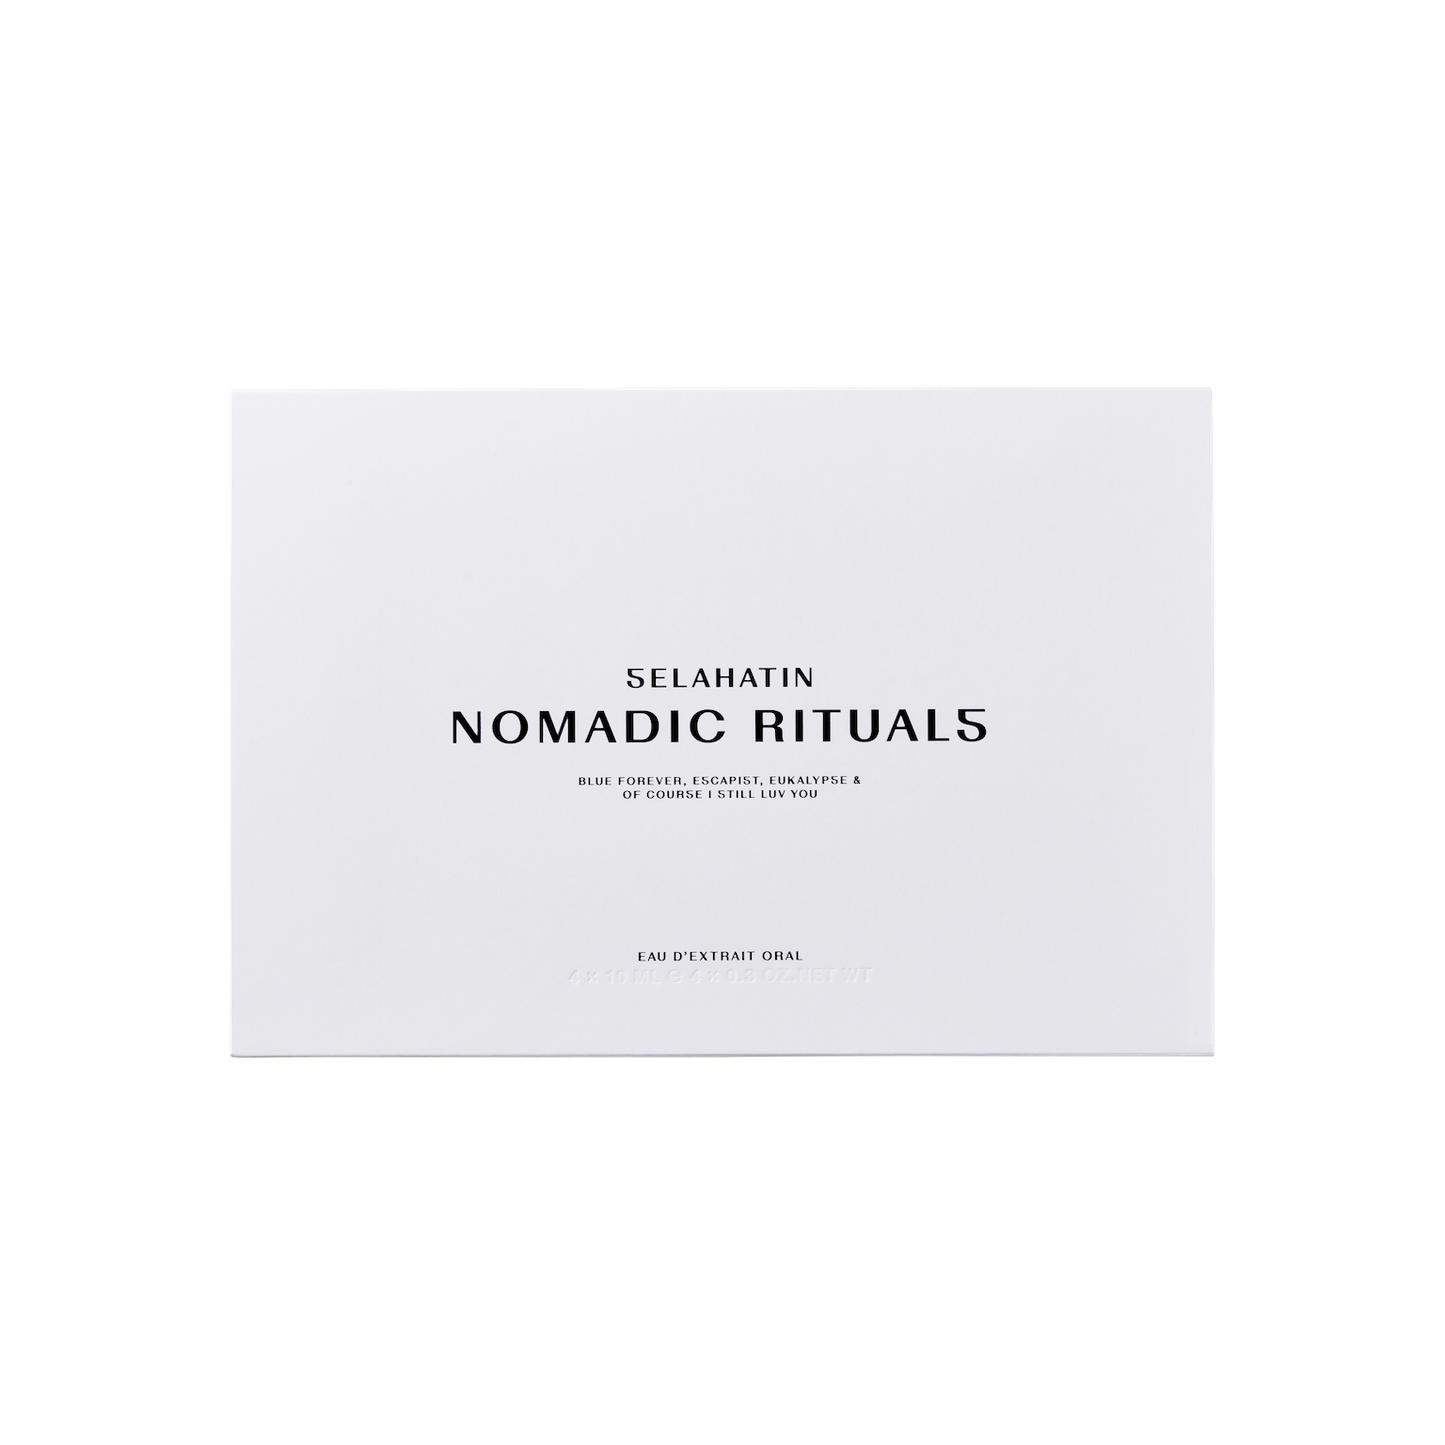 Nomadic Rituals